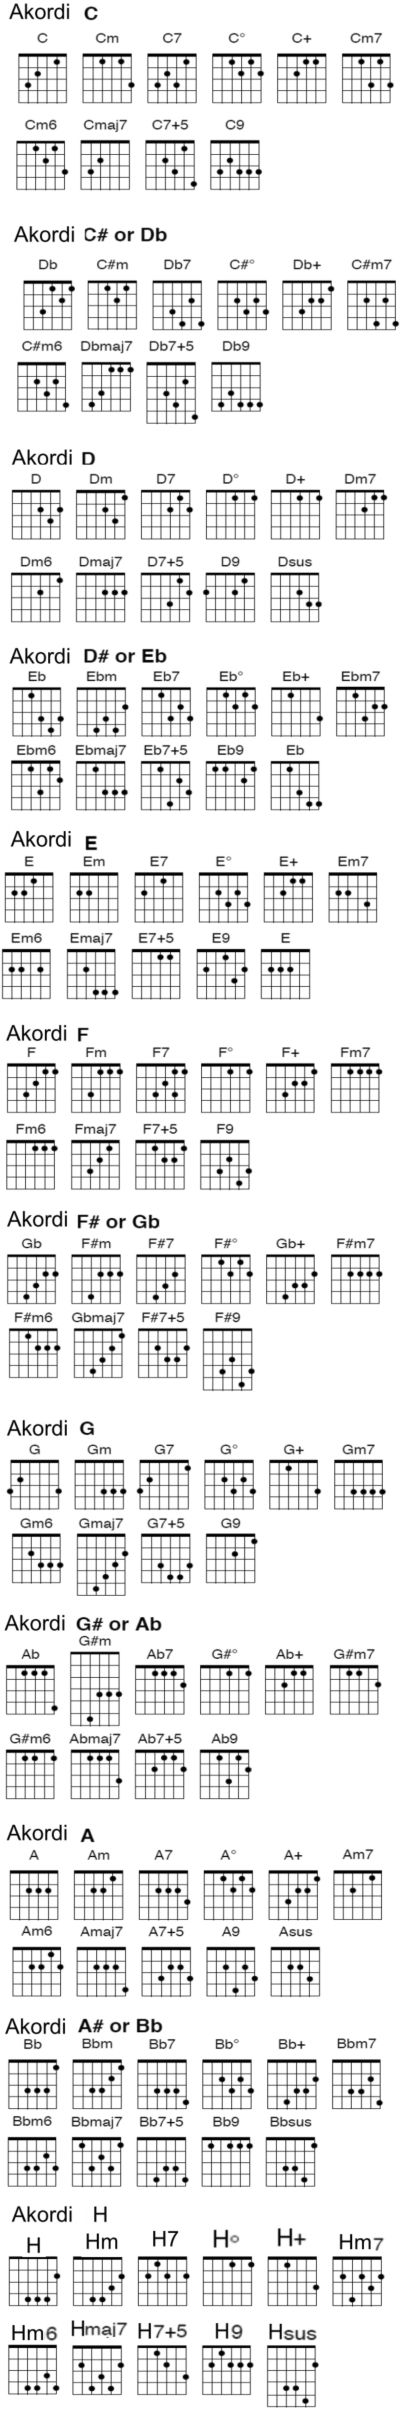 skola gitare za pocetnike pdf